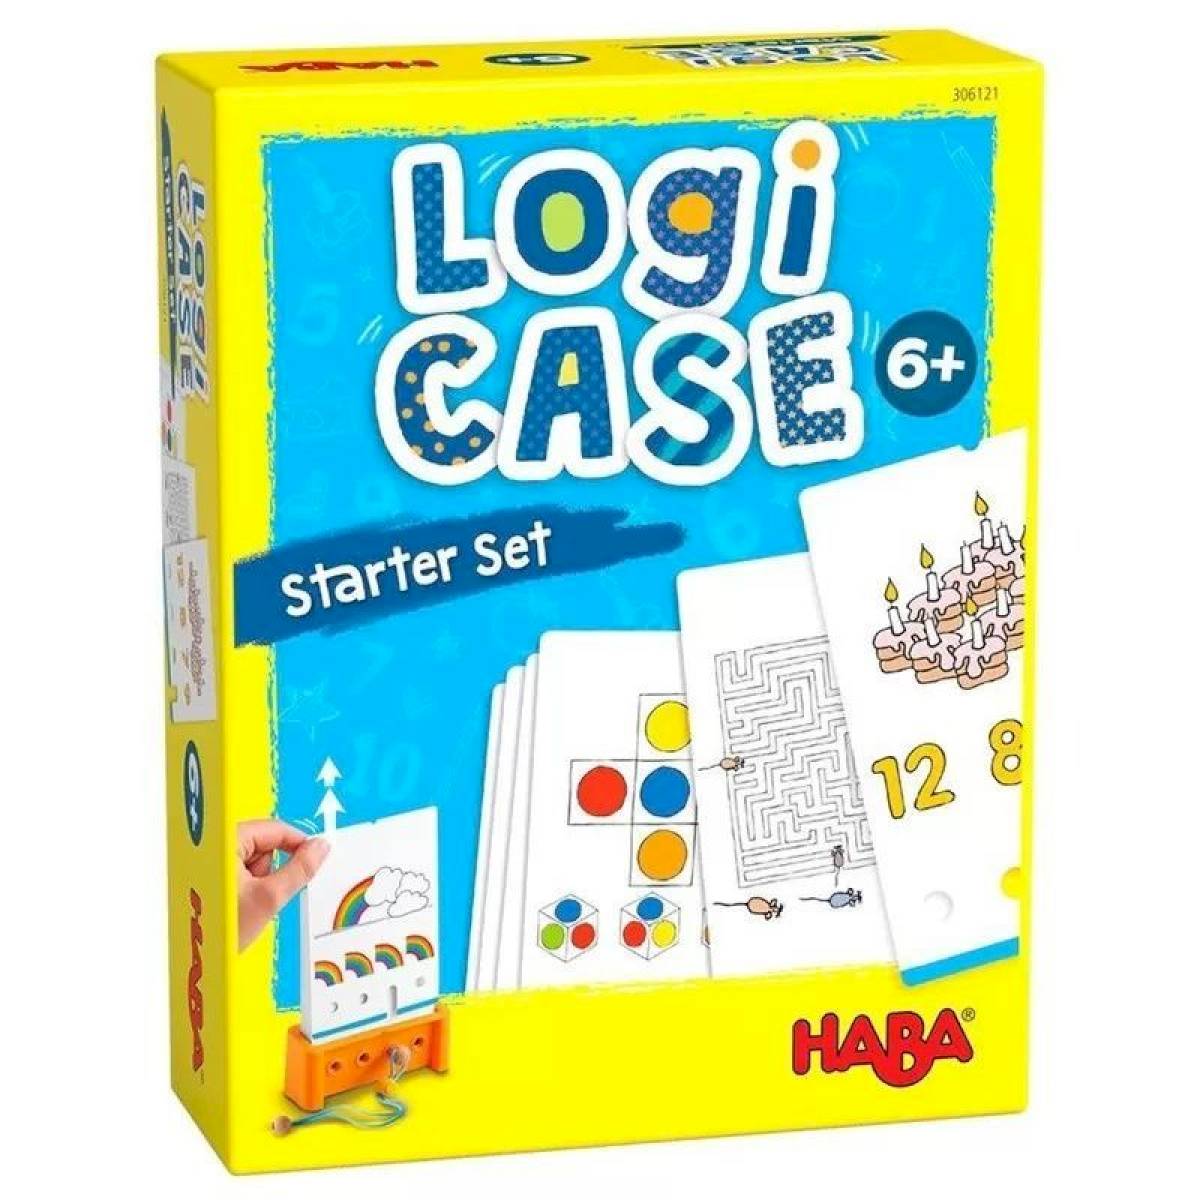 Logic! Case - Starter set 6+